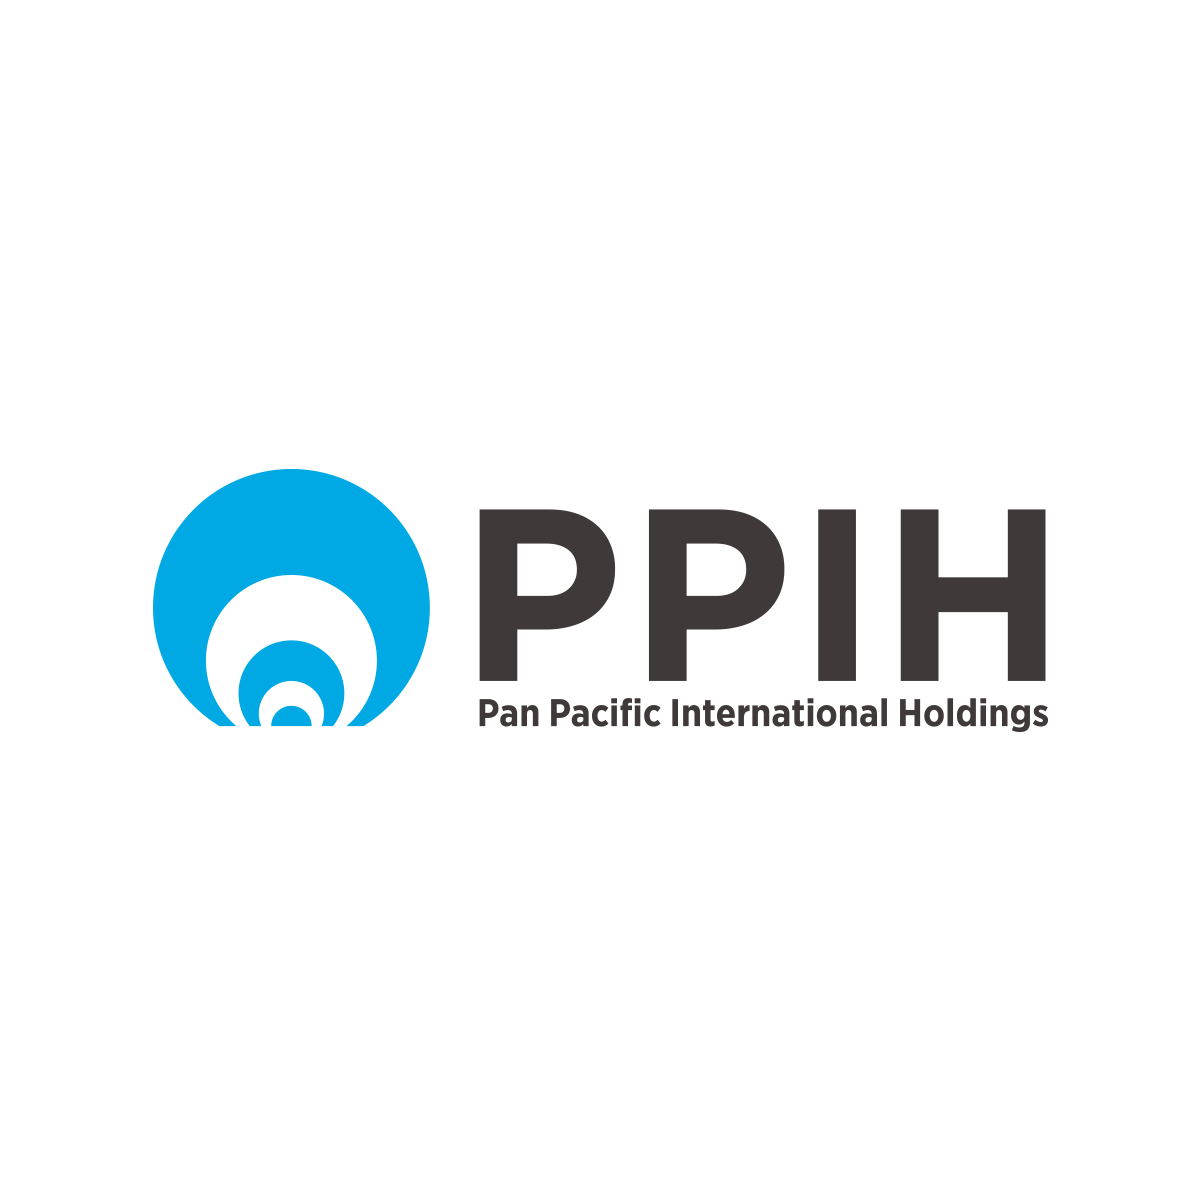 Pan Pacific International Holdings Corporation